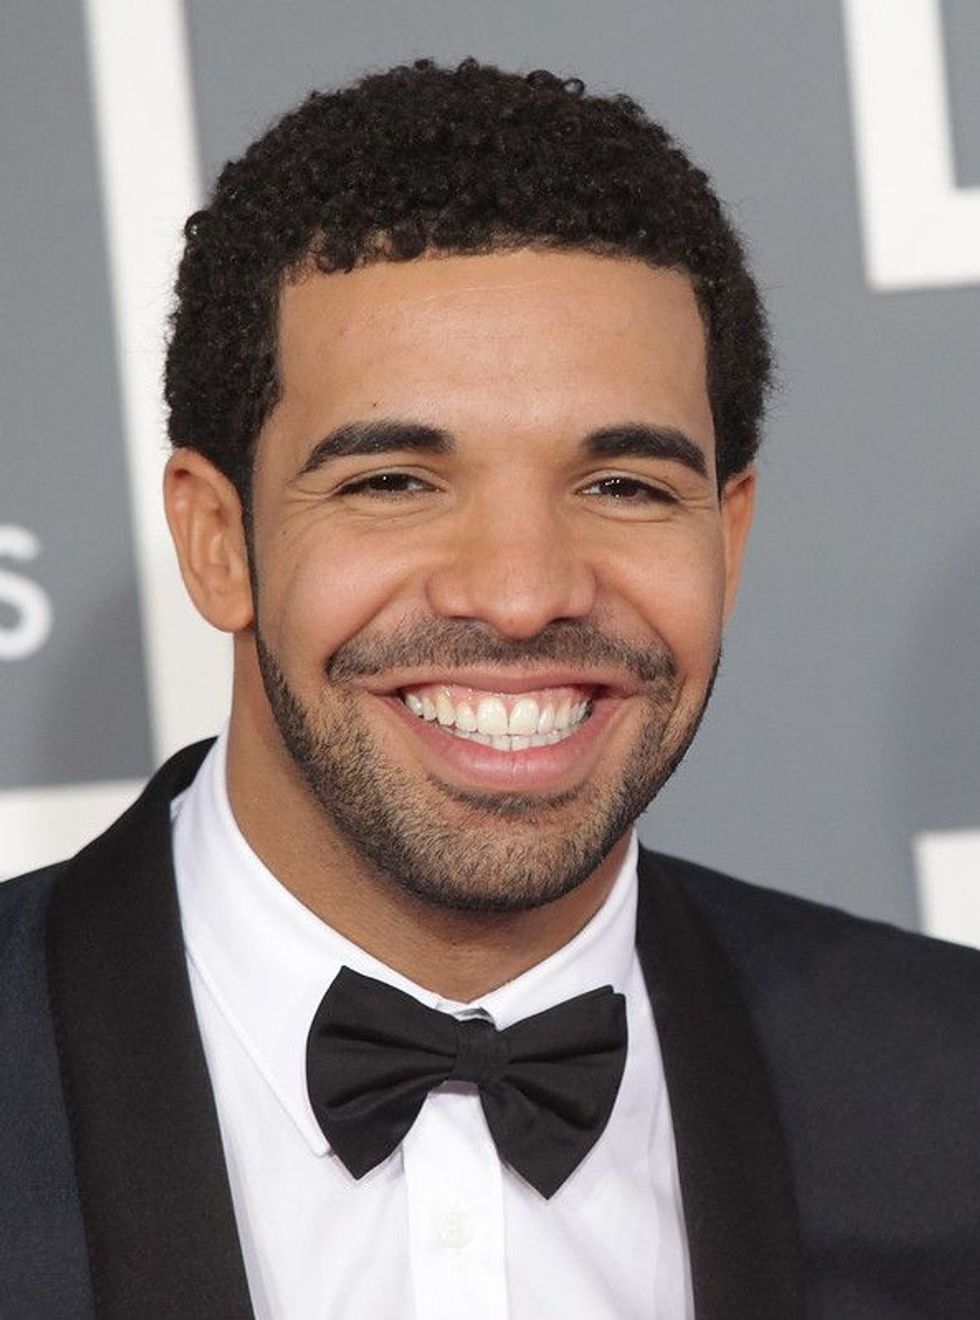 Drake at the Grammy Awards 2013